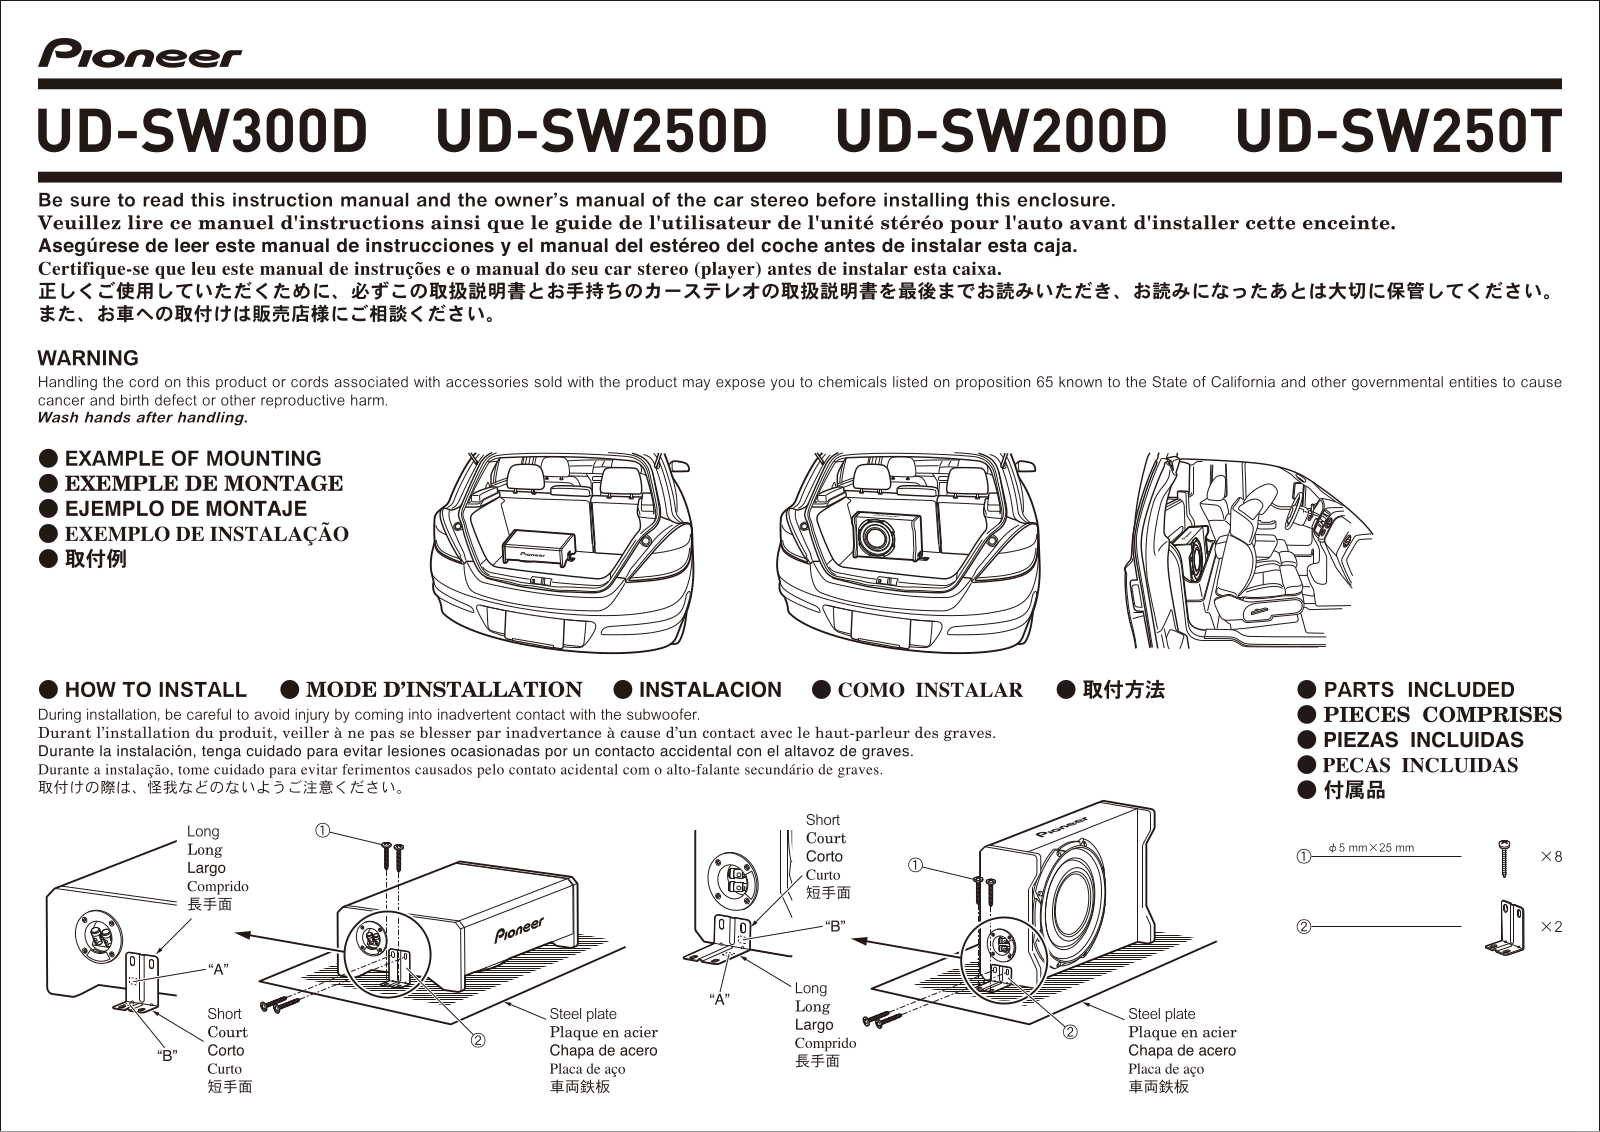 Pioneer UD-SW300D, UD-SW250T, UD-SW250D, UD-SW200D Owner's Manual